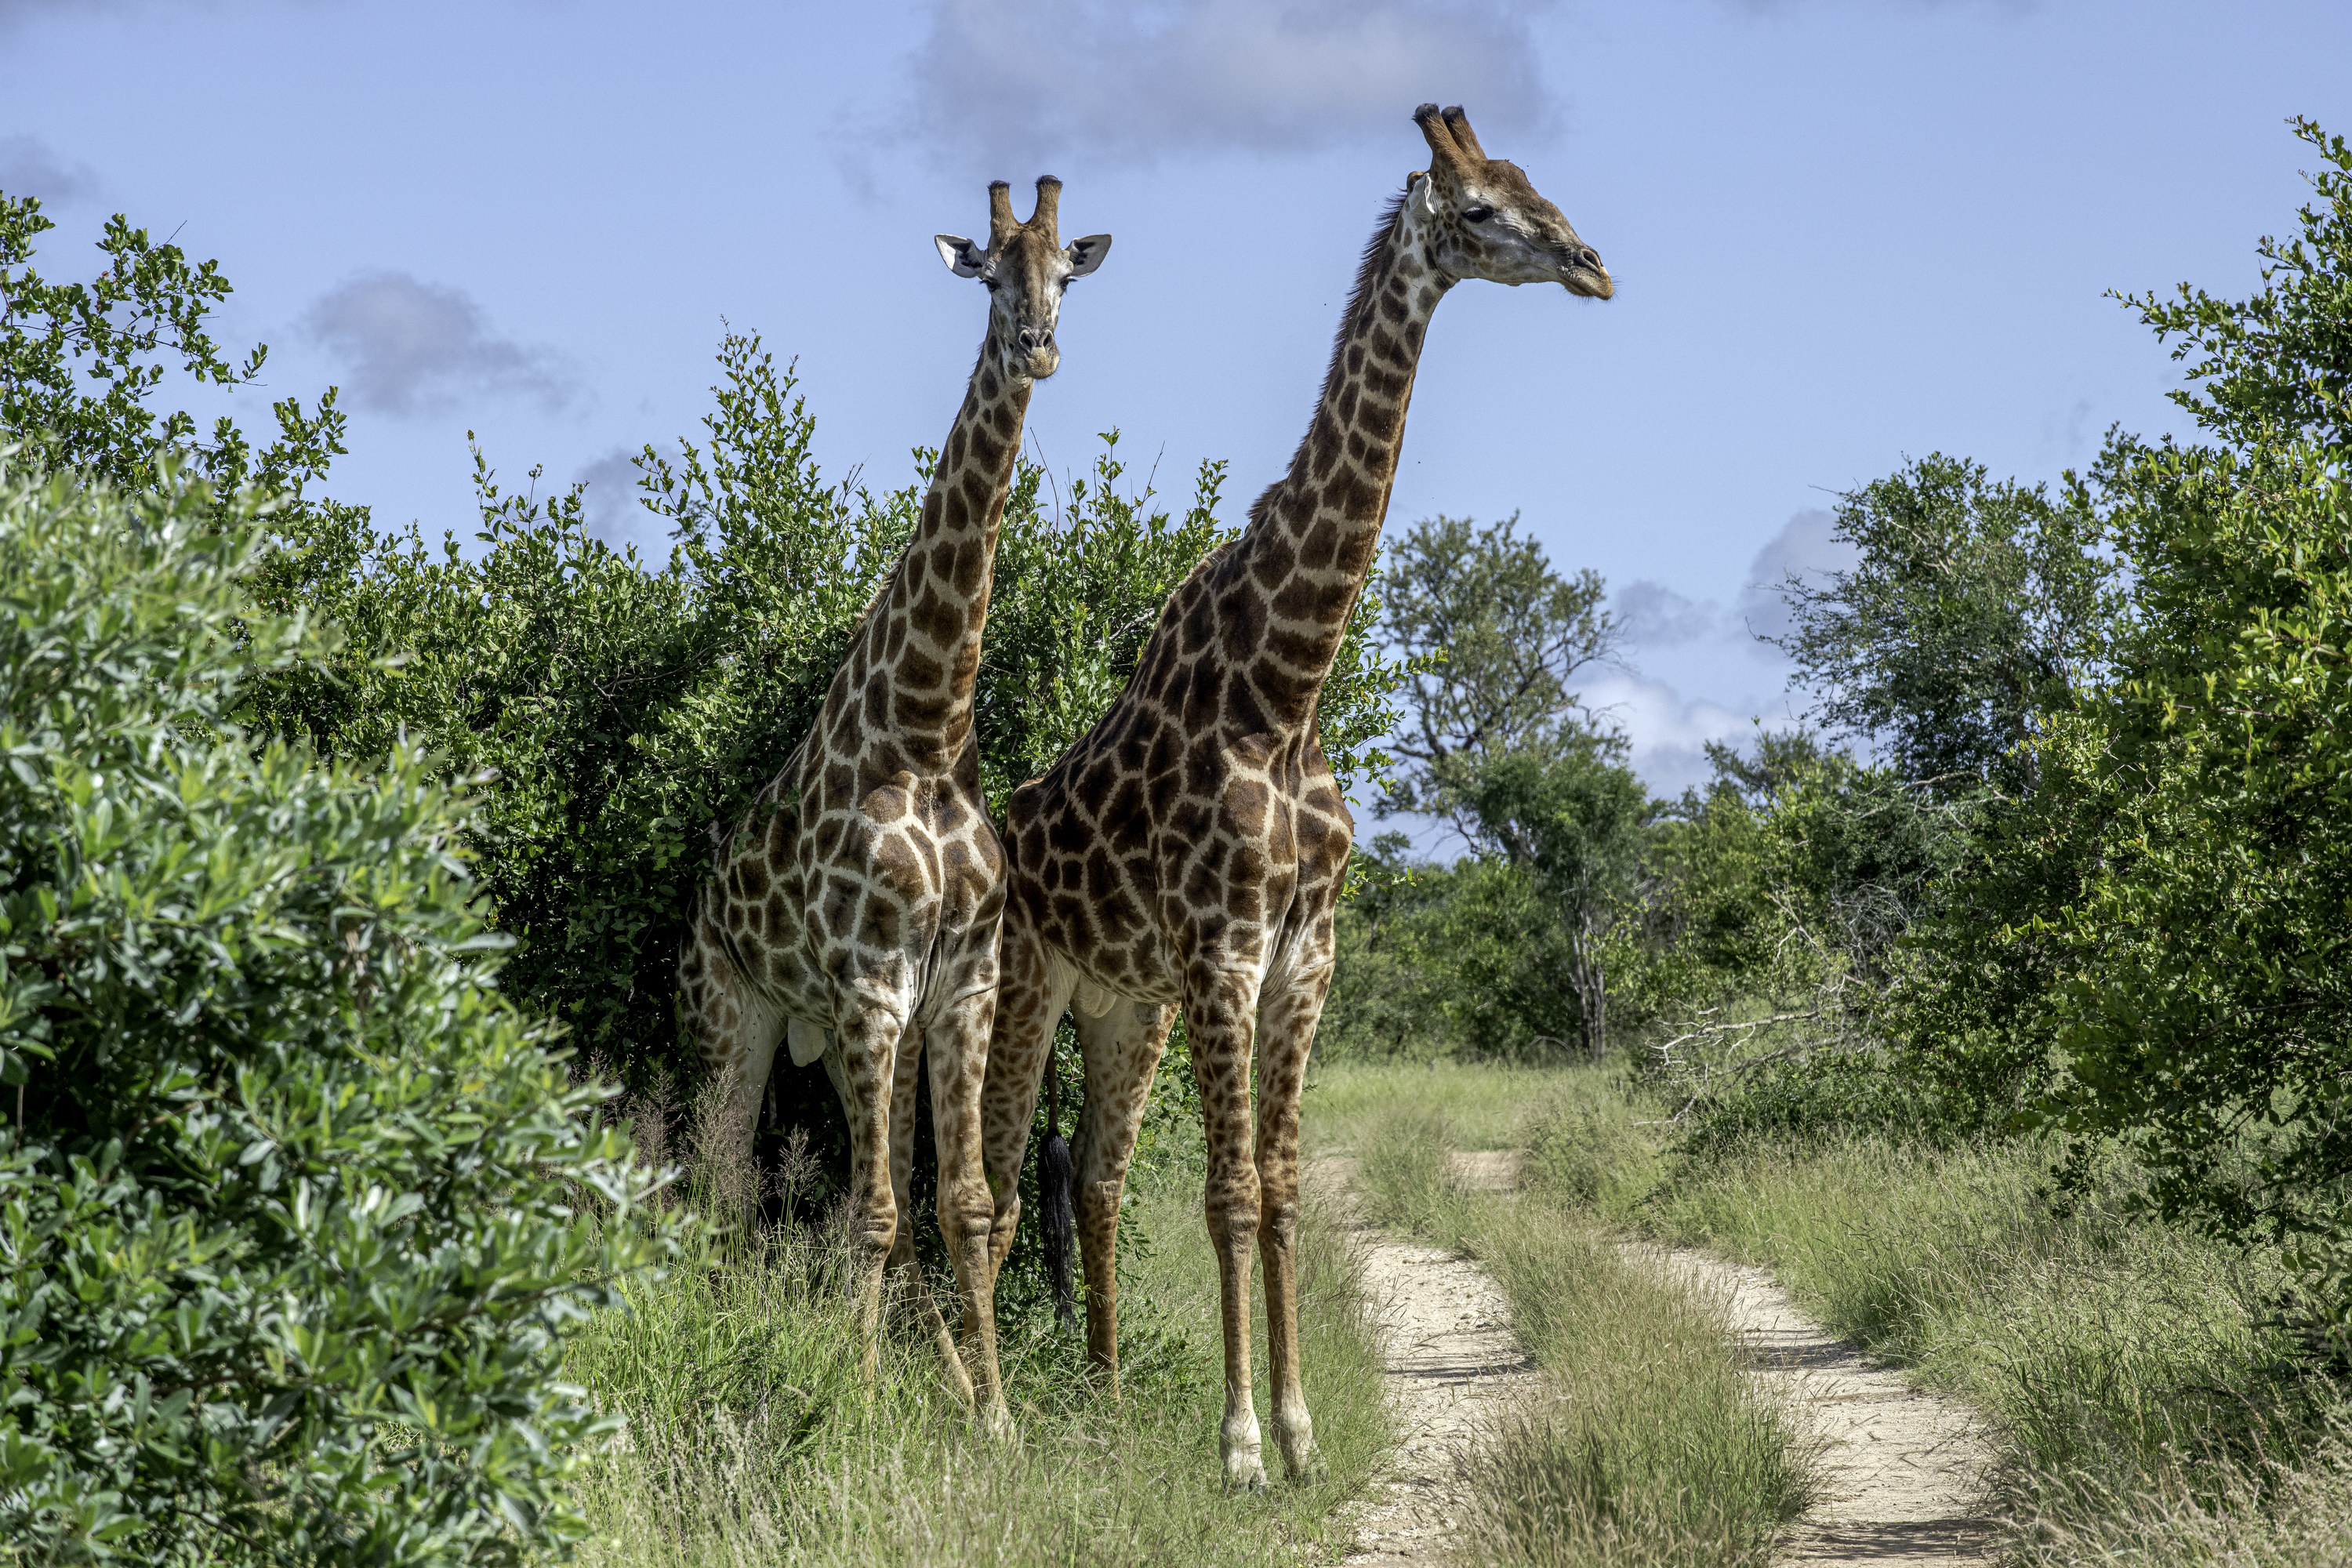 Two giraffes walking onto a safari trail